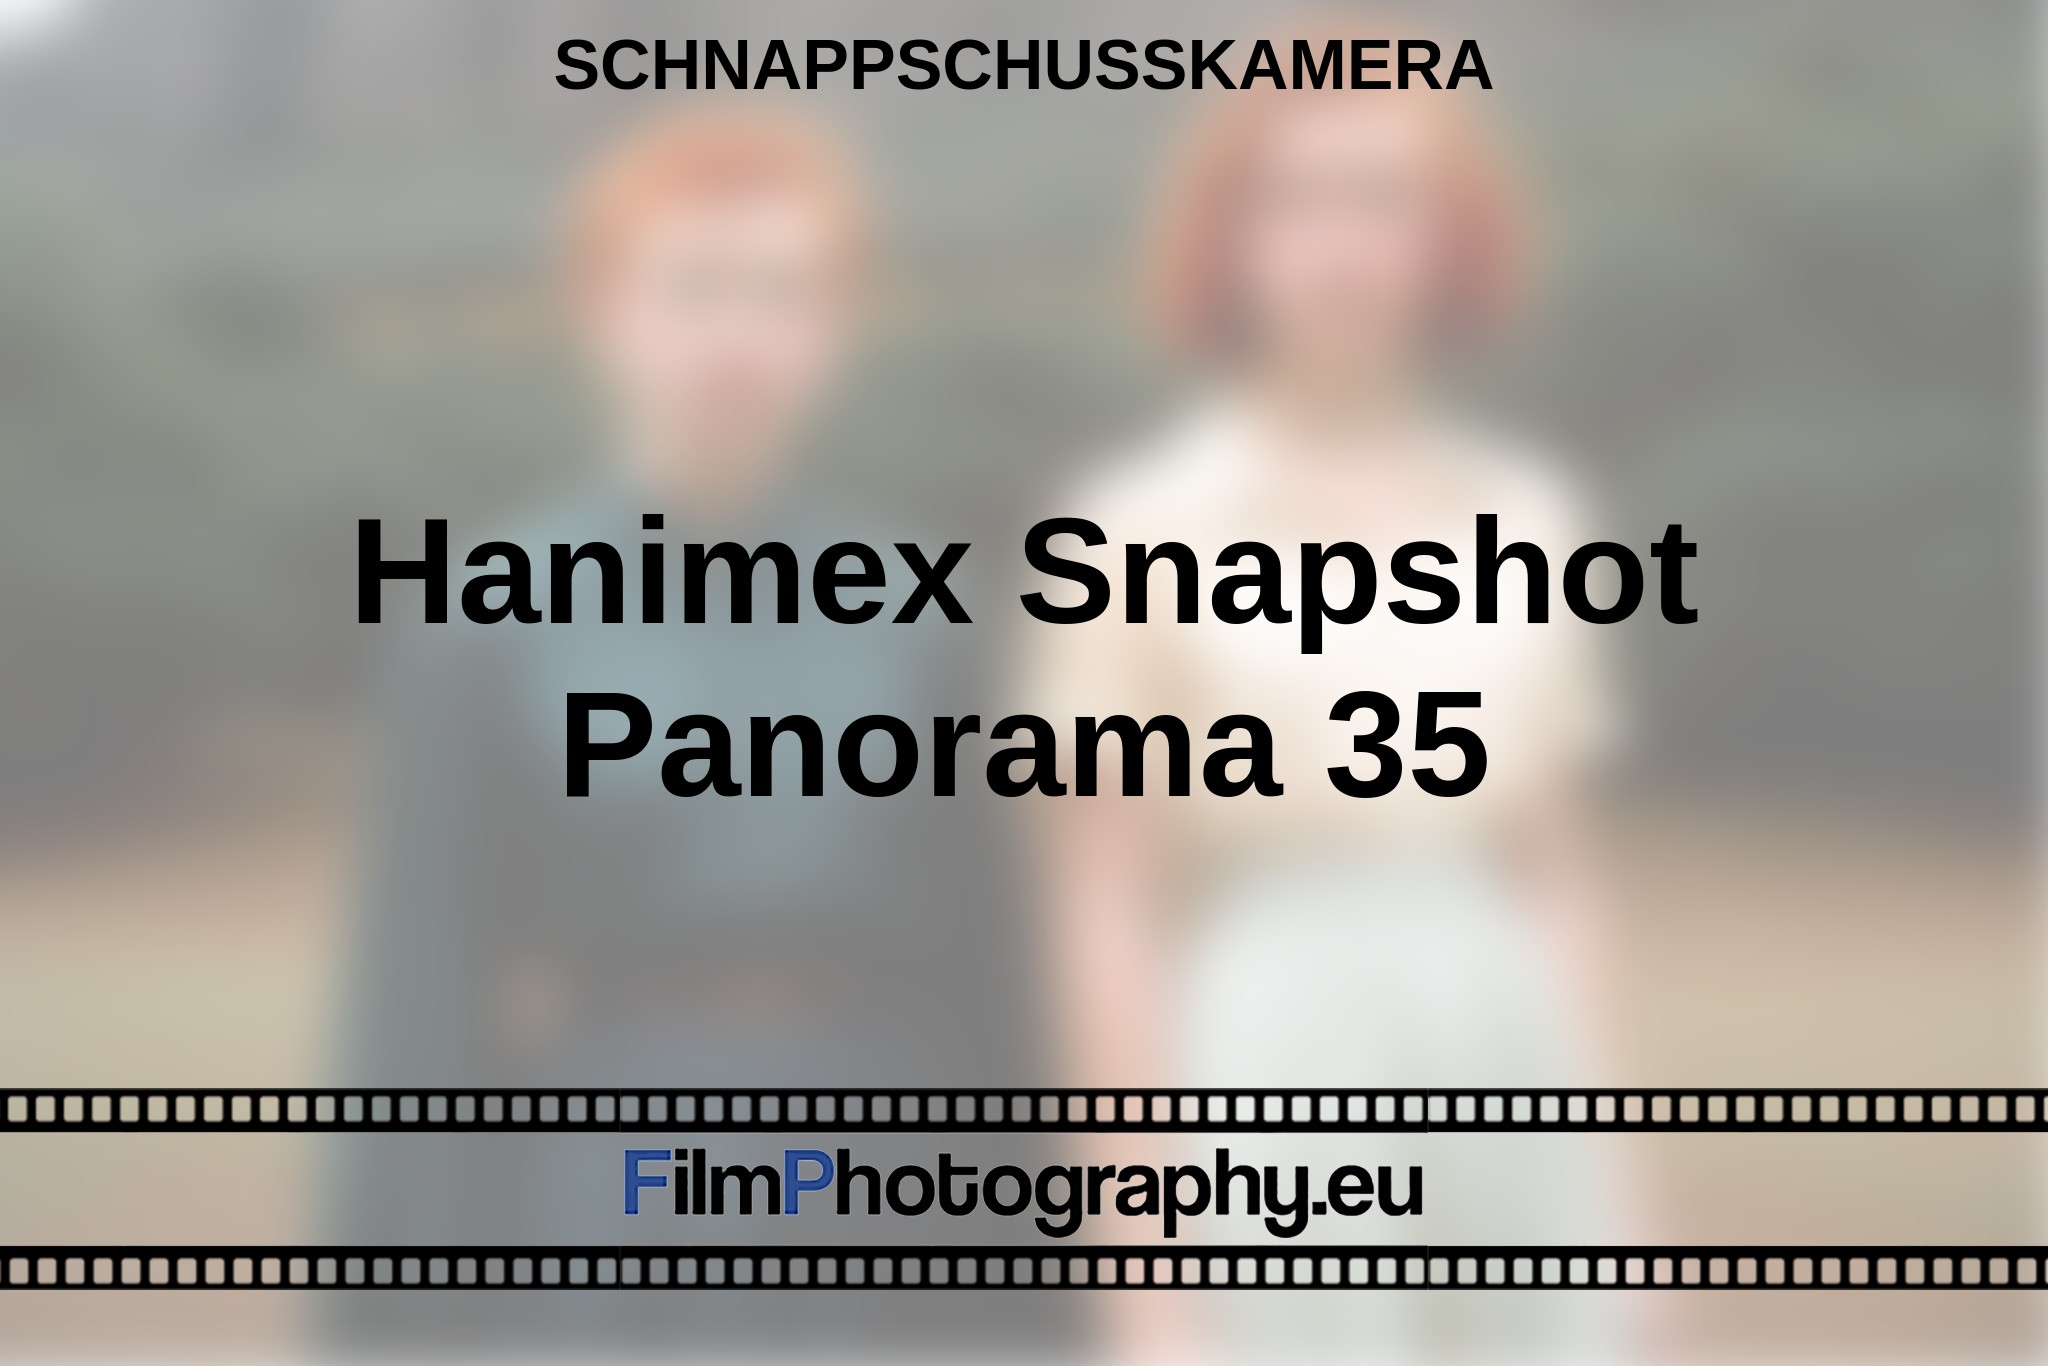 hanimex-snapshot-panorama-35-schnappschusskamera-bnv.jpg